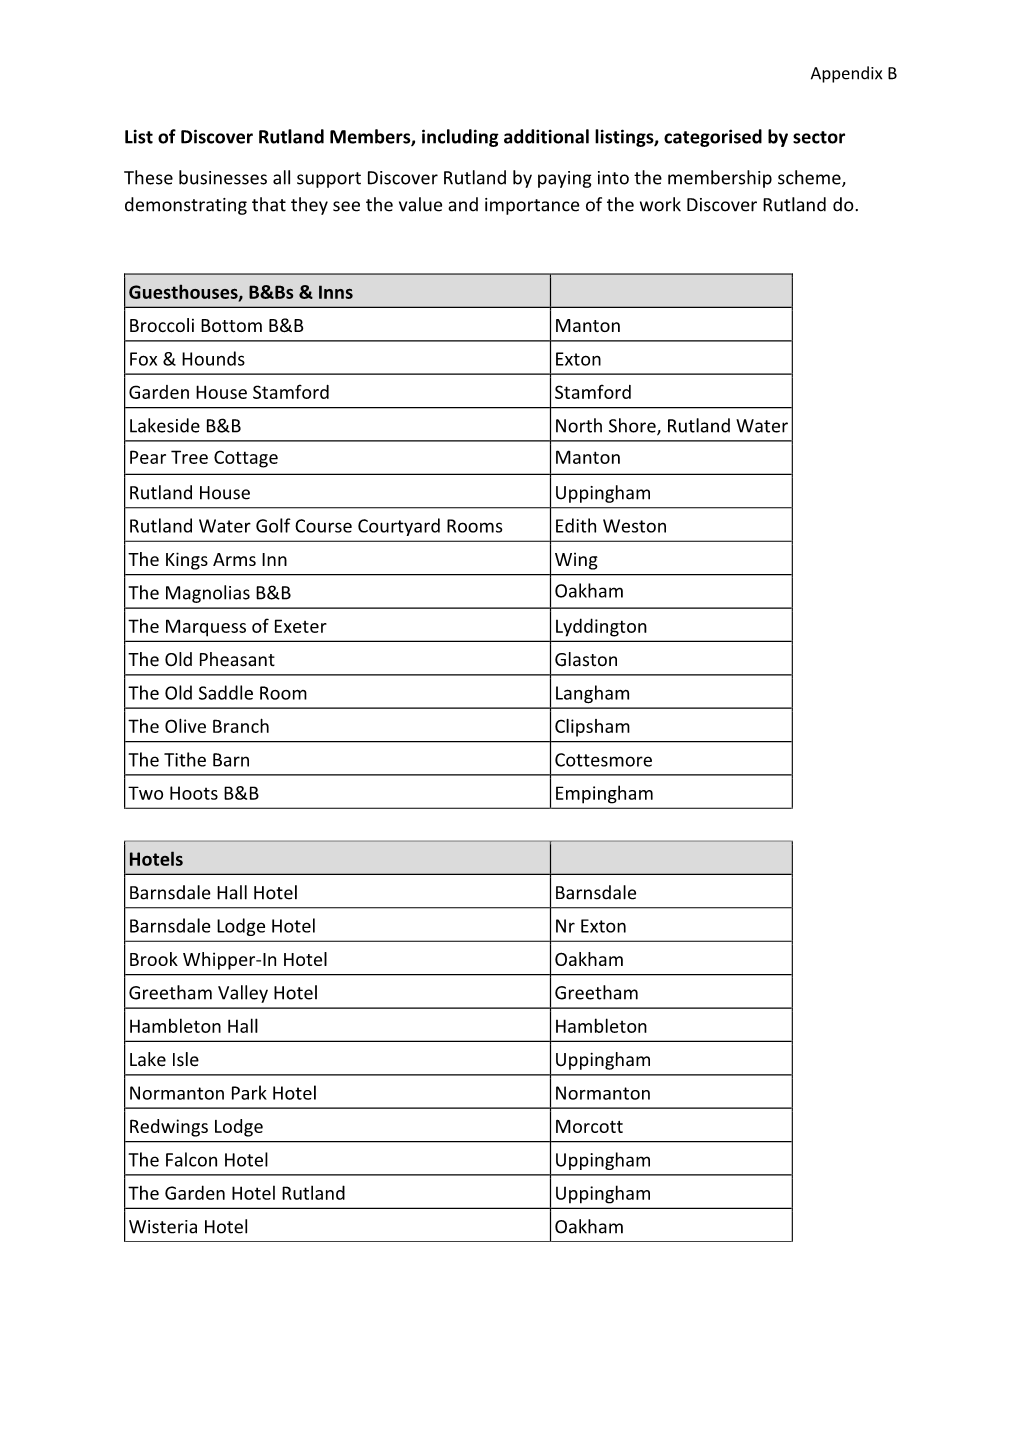 Appendix B List of Members.Pdf